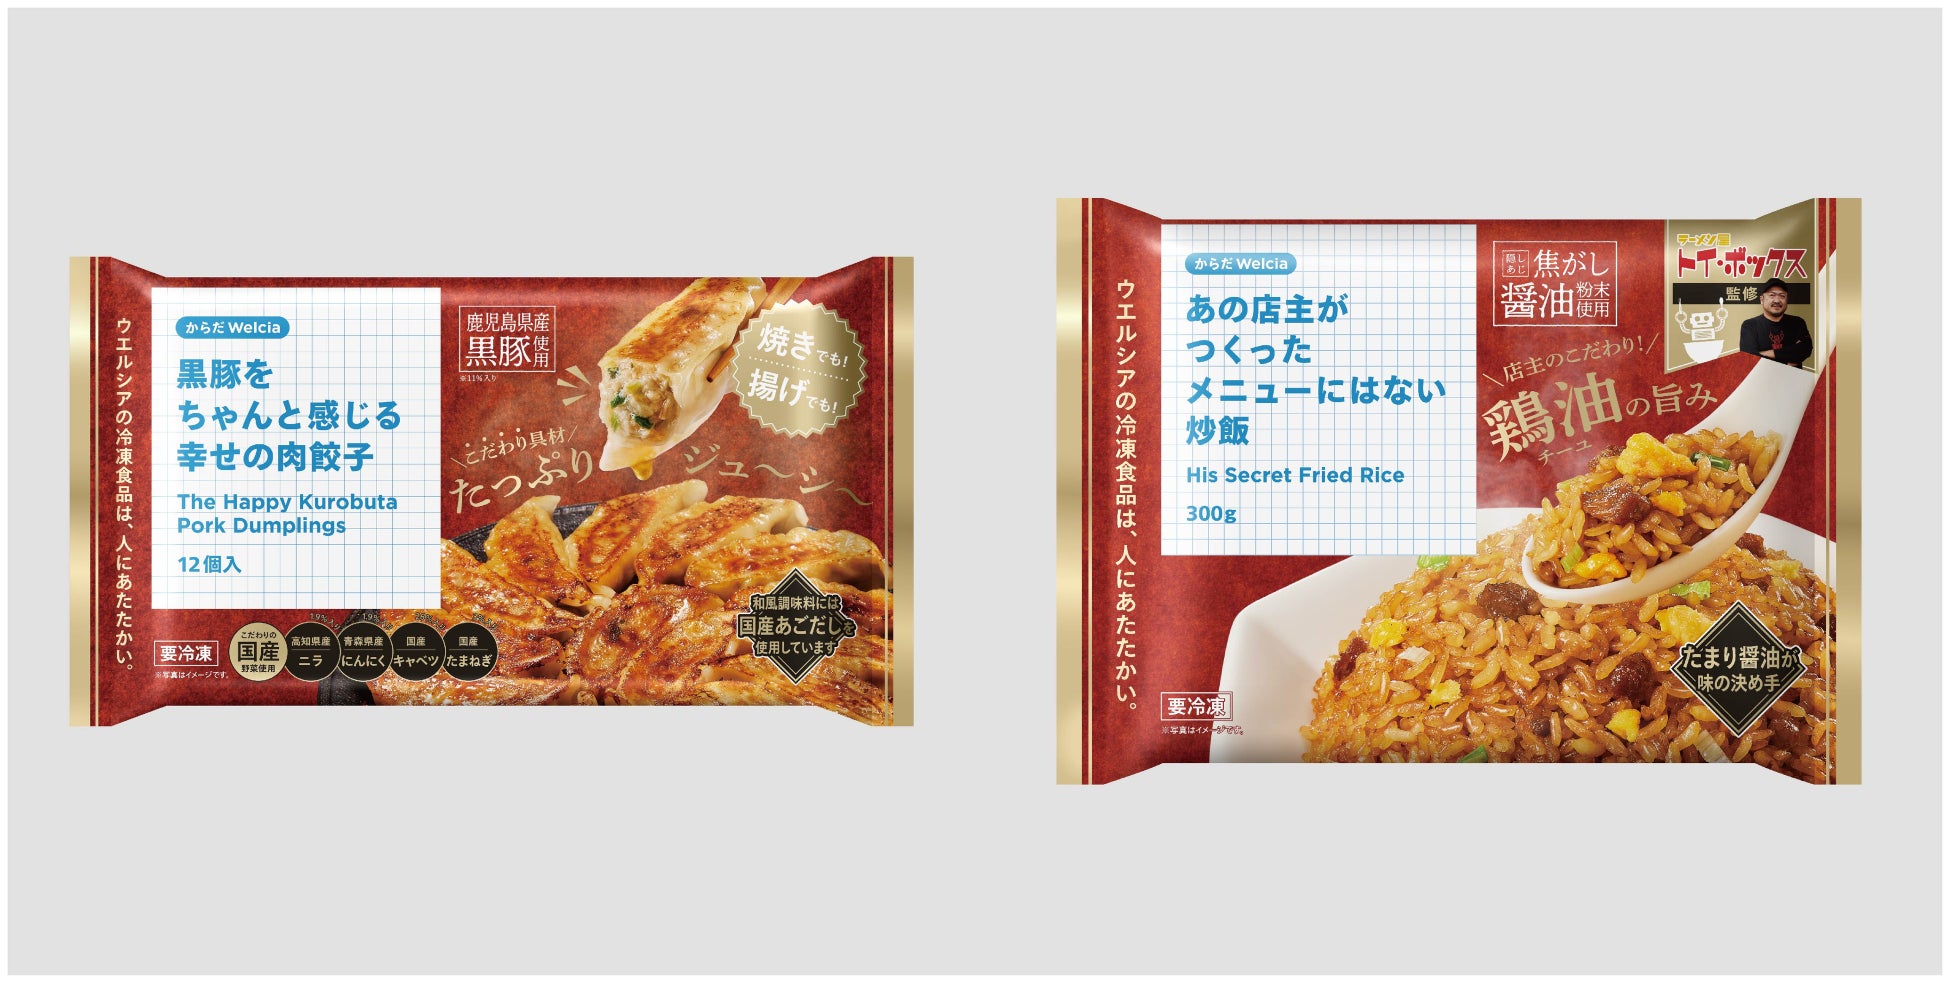 JR大宮駅のエキナカ商業施設「エキュート大宮」の冷凍自動販売機で「宅麺.com」から厳選した人気ラーメン店の商品を提供開始